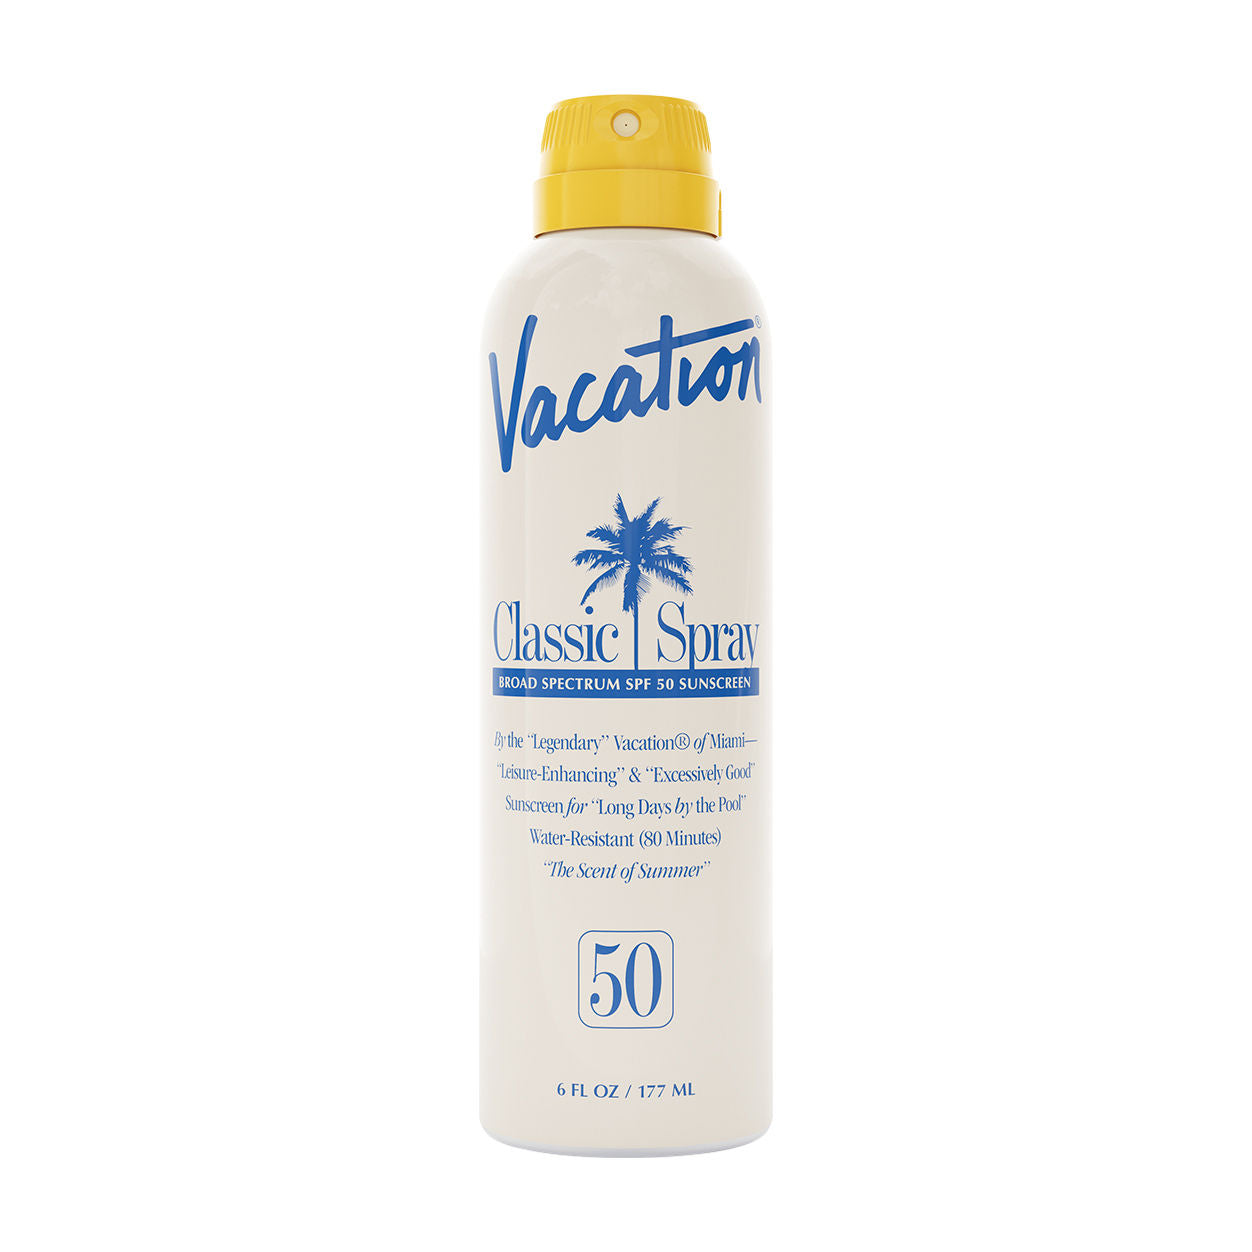 Vacation Classic Spray SPF 50 main image